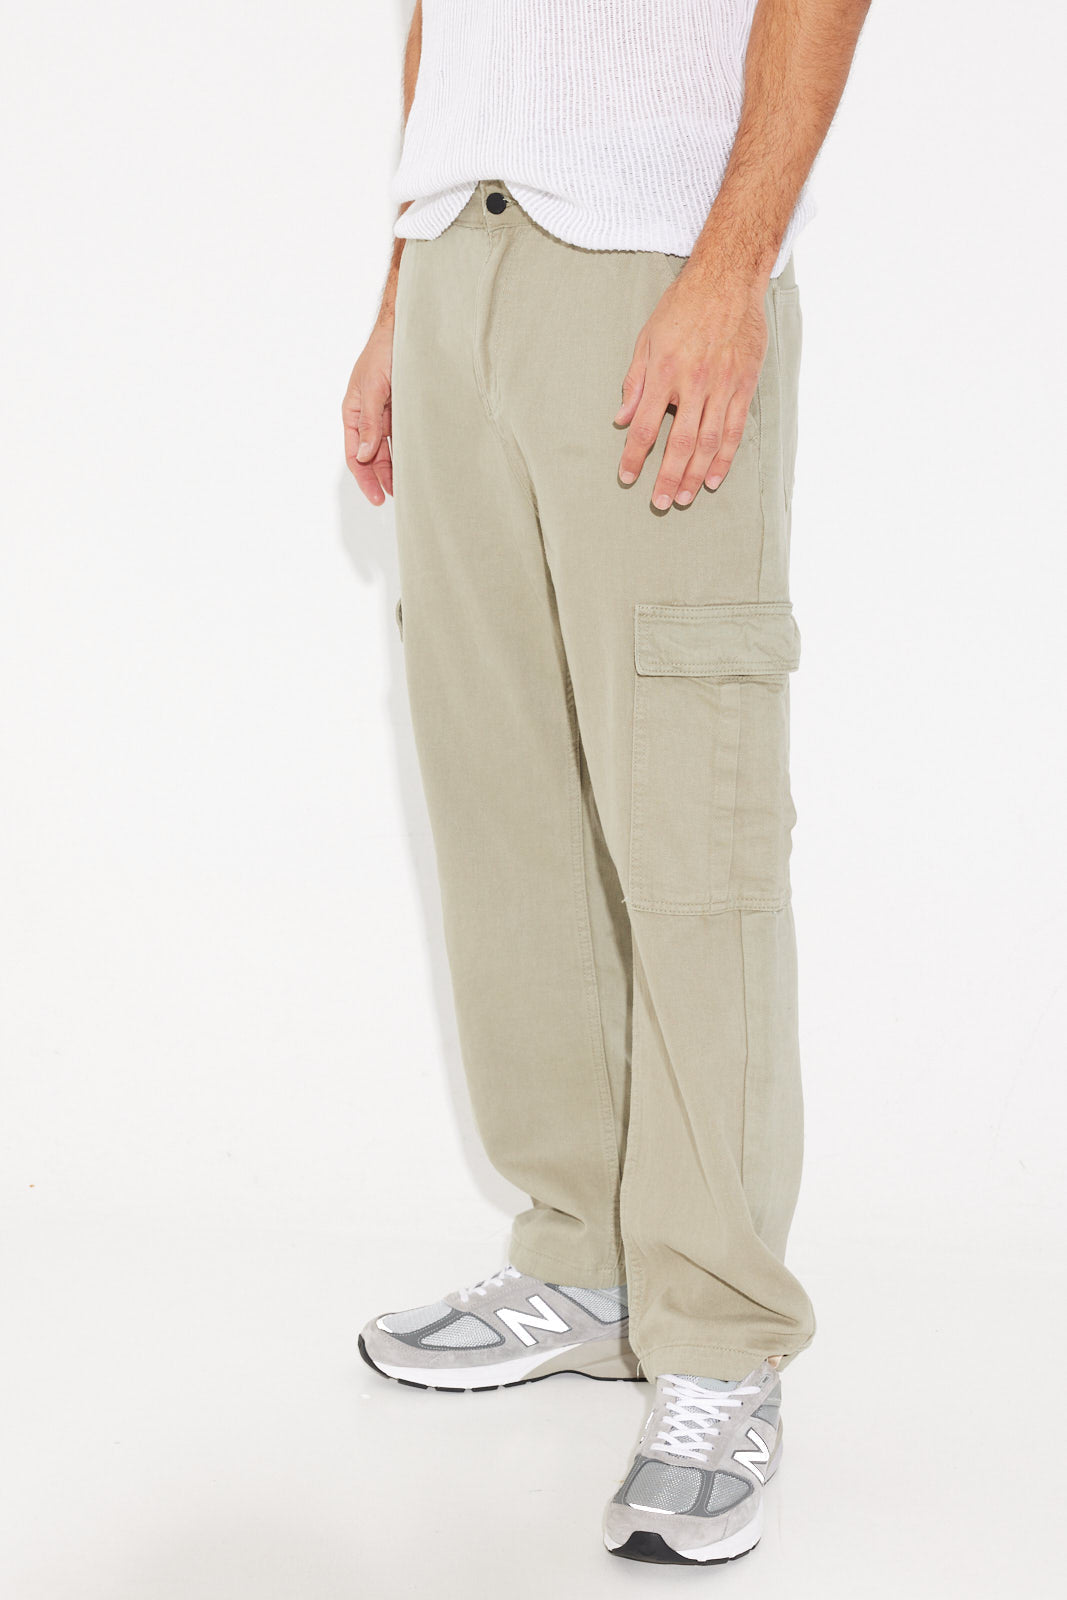 Wrangler Men's Regular Fit Jeans With Comfort Flex Waistband 34 X 29 for  sale online | eBay